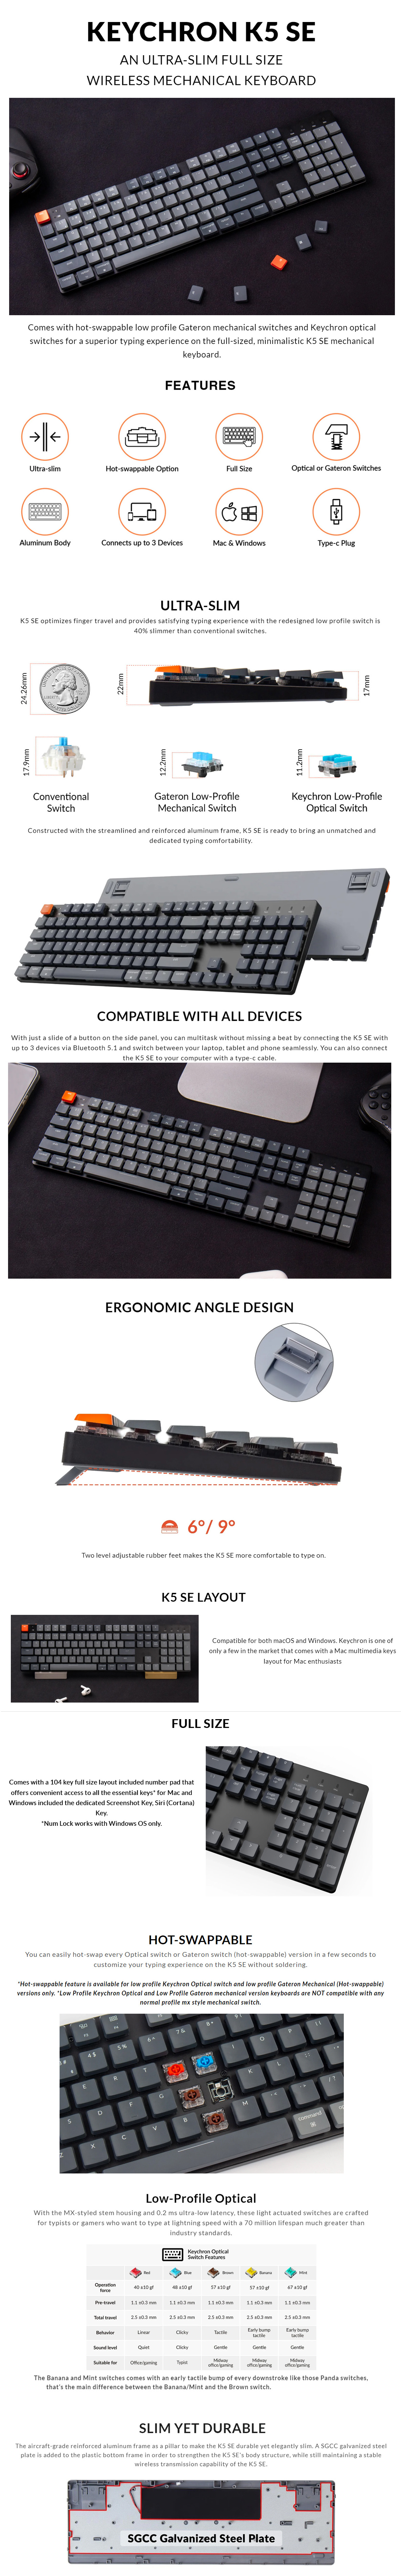 Keyboards-Keychron-K5-SE-RGB-Wireless-Full-Optical-Mechanical-Keyboard-Red-Switch-2